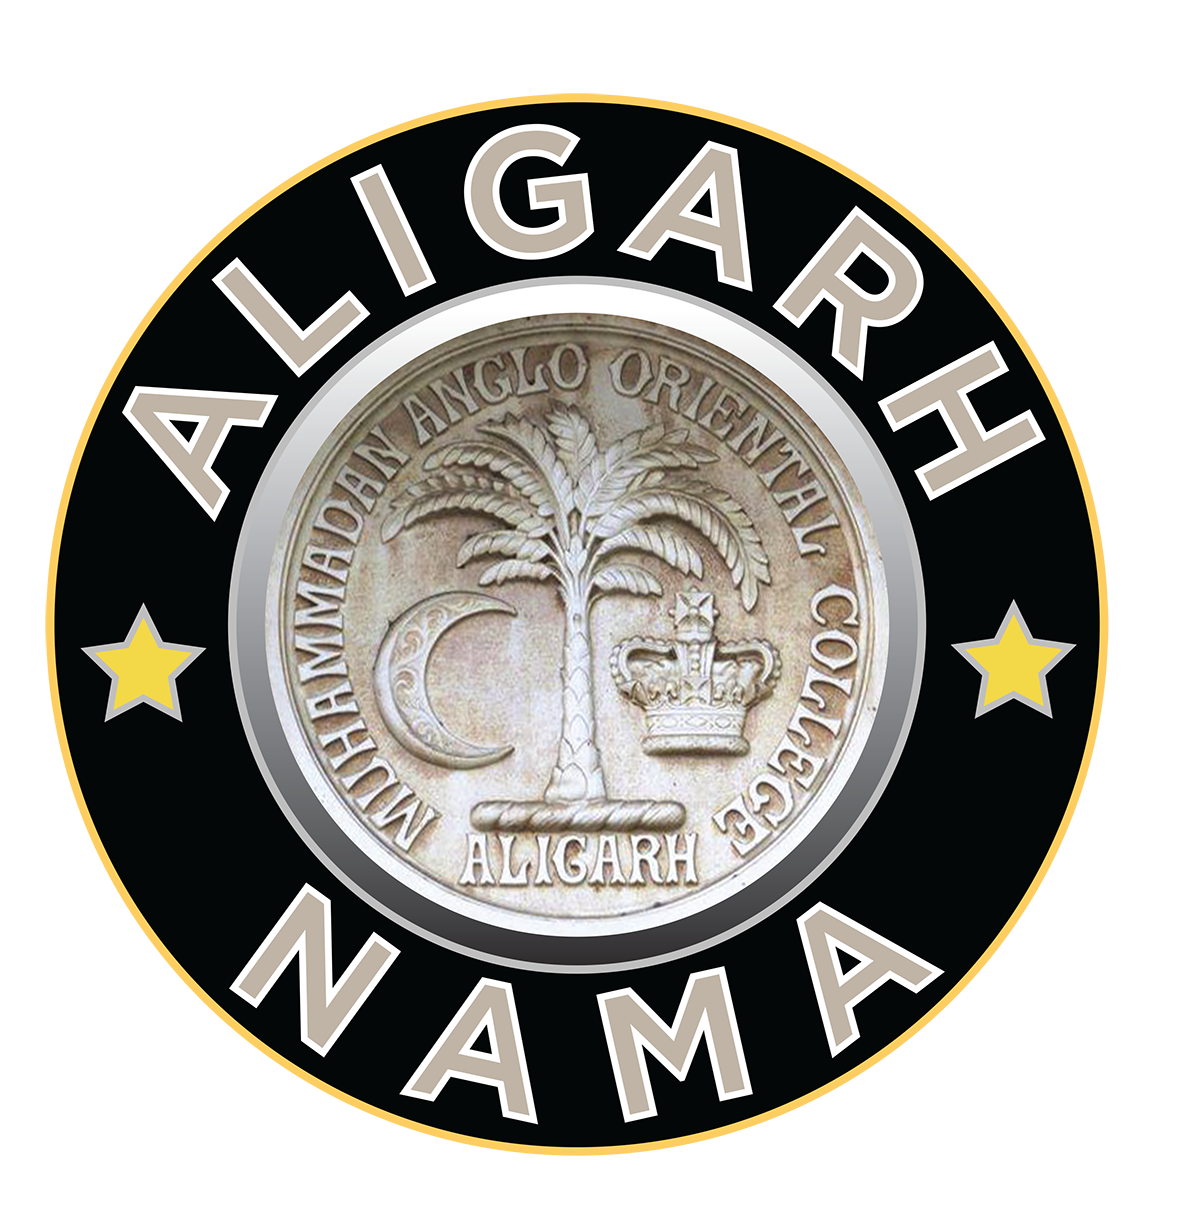 Aligarh Nama – Buy AMU Mugs, Table Calendar, Badge, Keychains